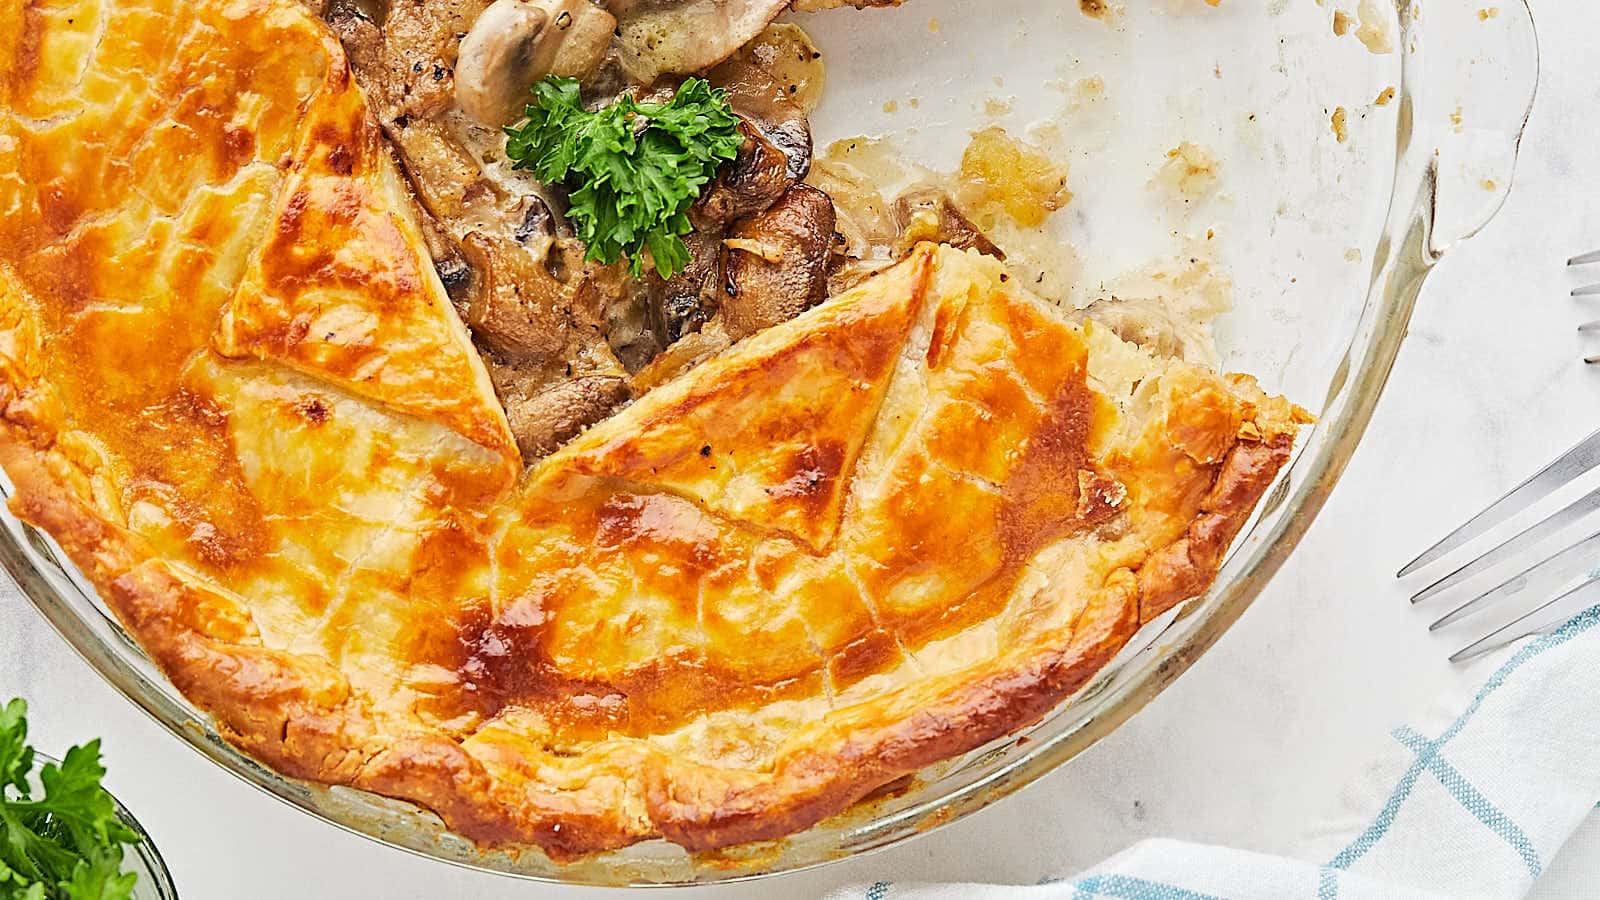 Mushroom Pie recipe by Cheerful Cook.